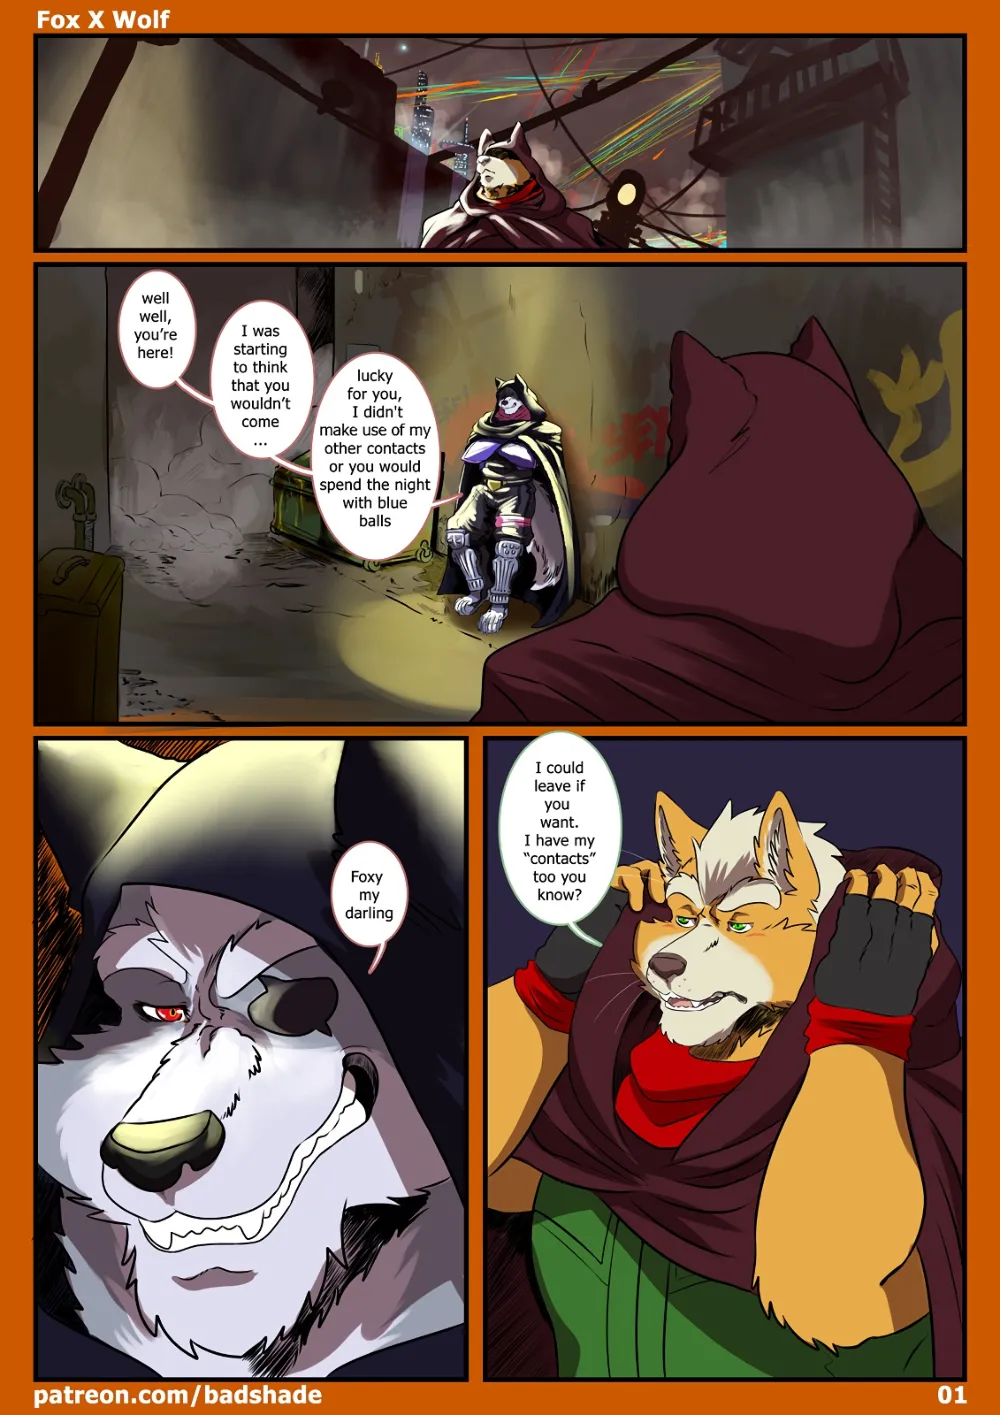 Fox X Wolf - Page 1